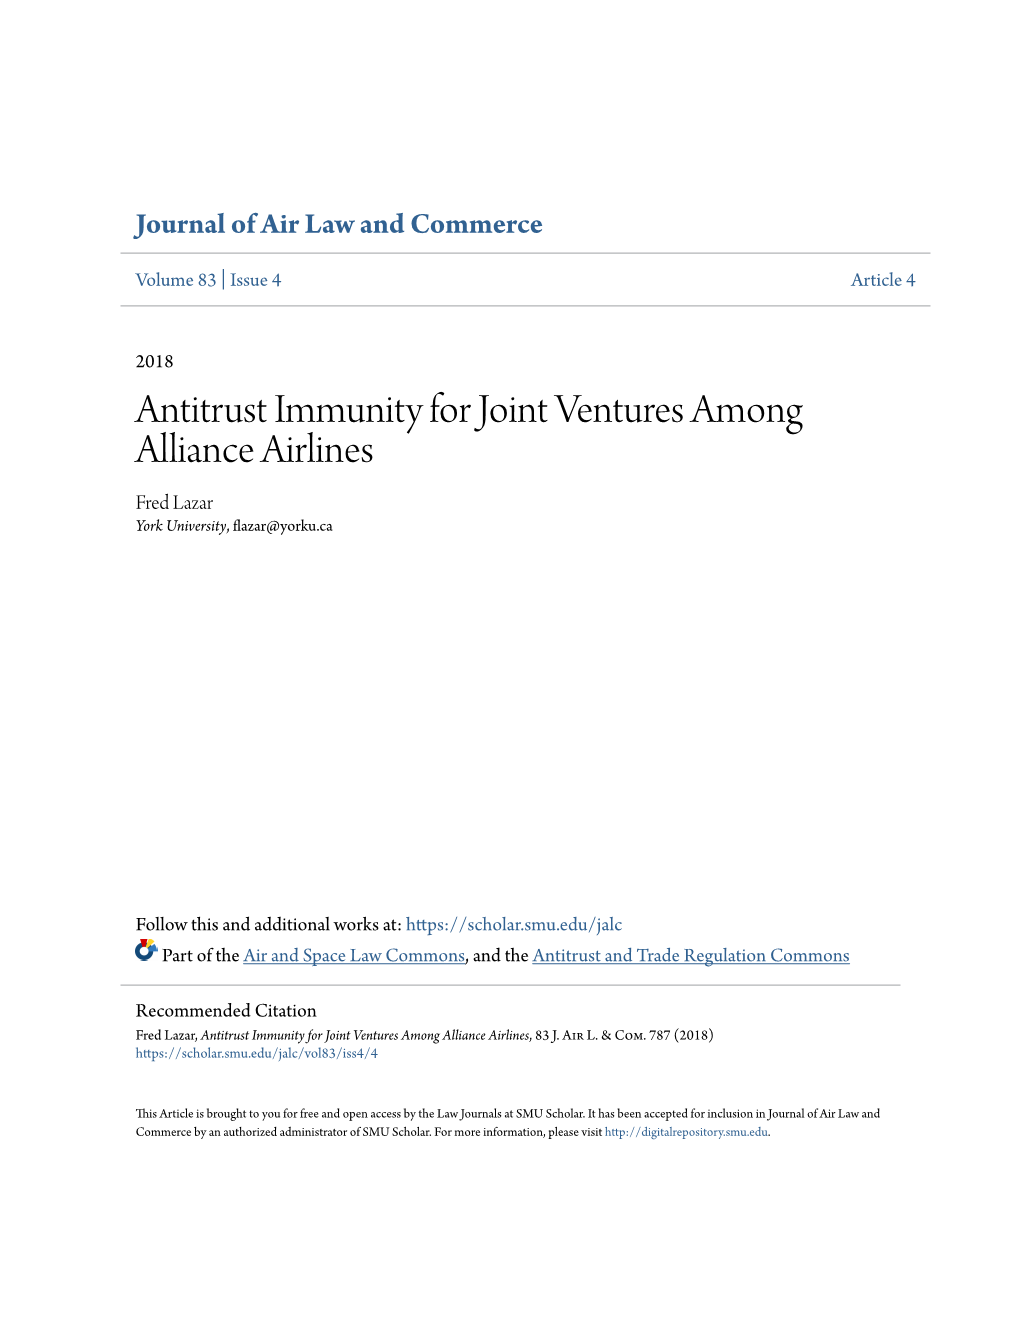 Antitrust Immunity for Joint Ventures Among Alliance Airlines Fred Lazar York University, Flazar@Yorku.Ca